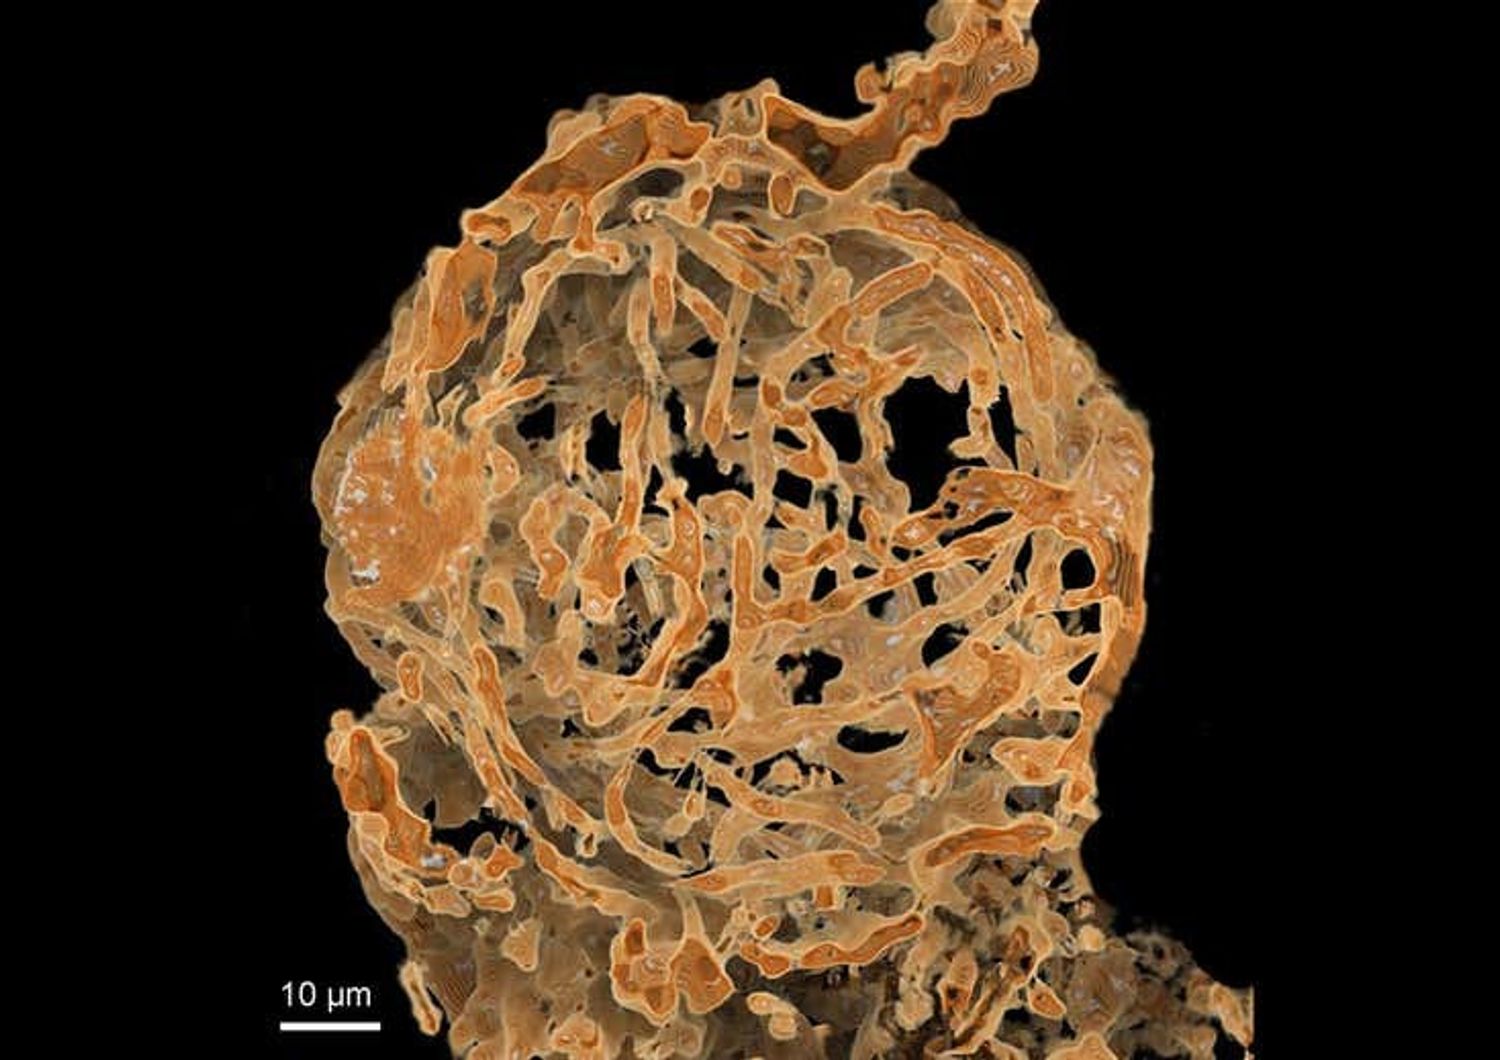 Spermatozoi fossili gamberetti